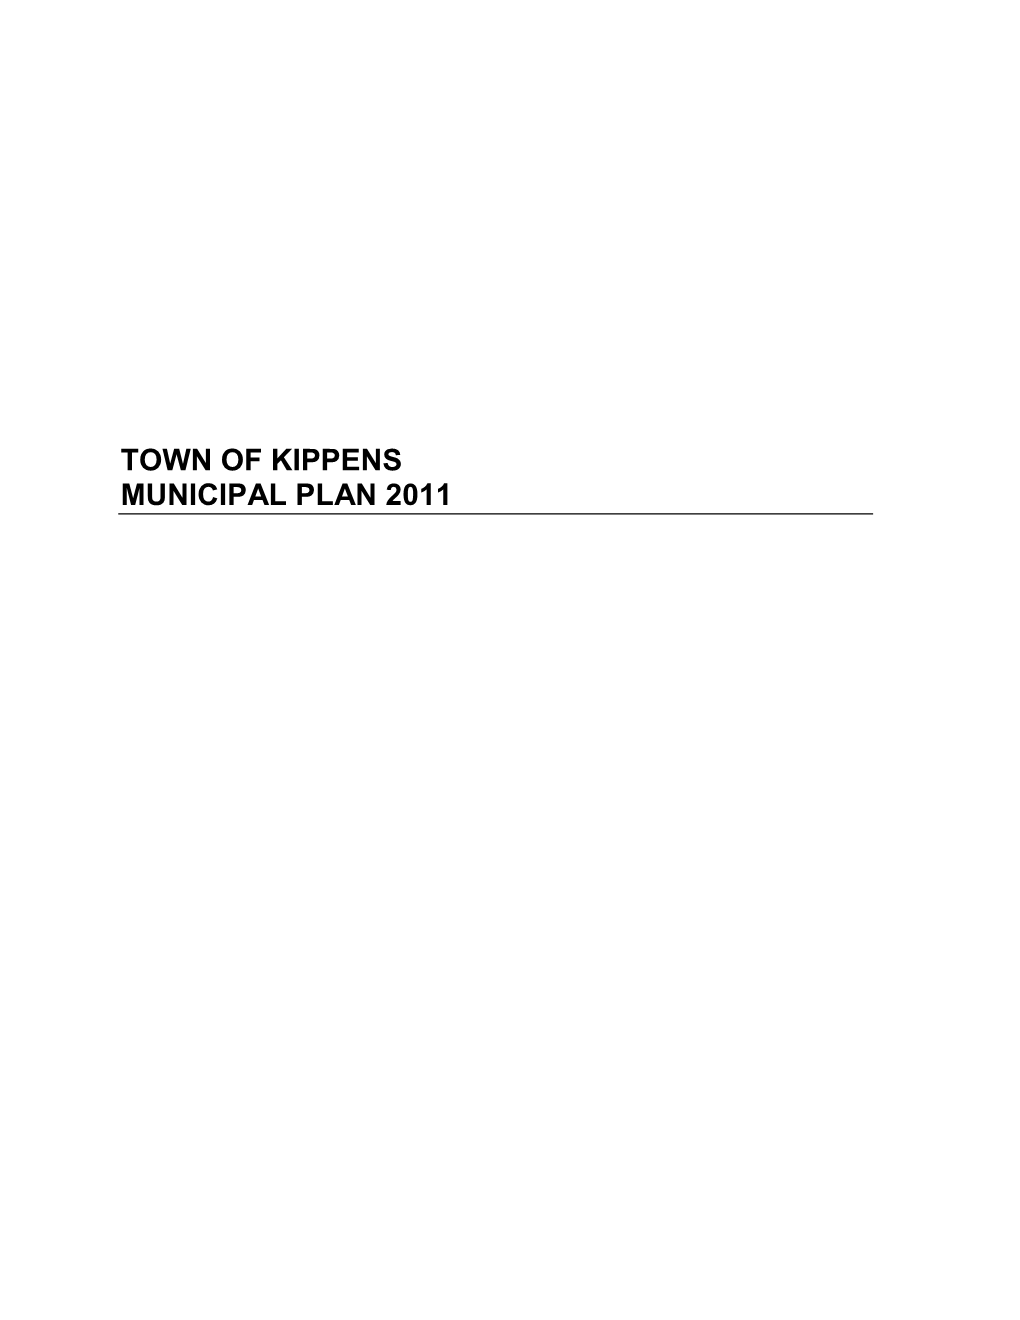 Kippens Municipal Plan 2011